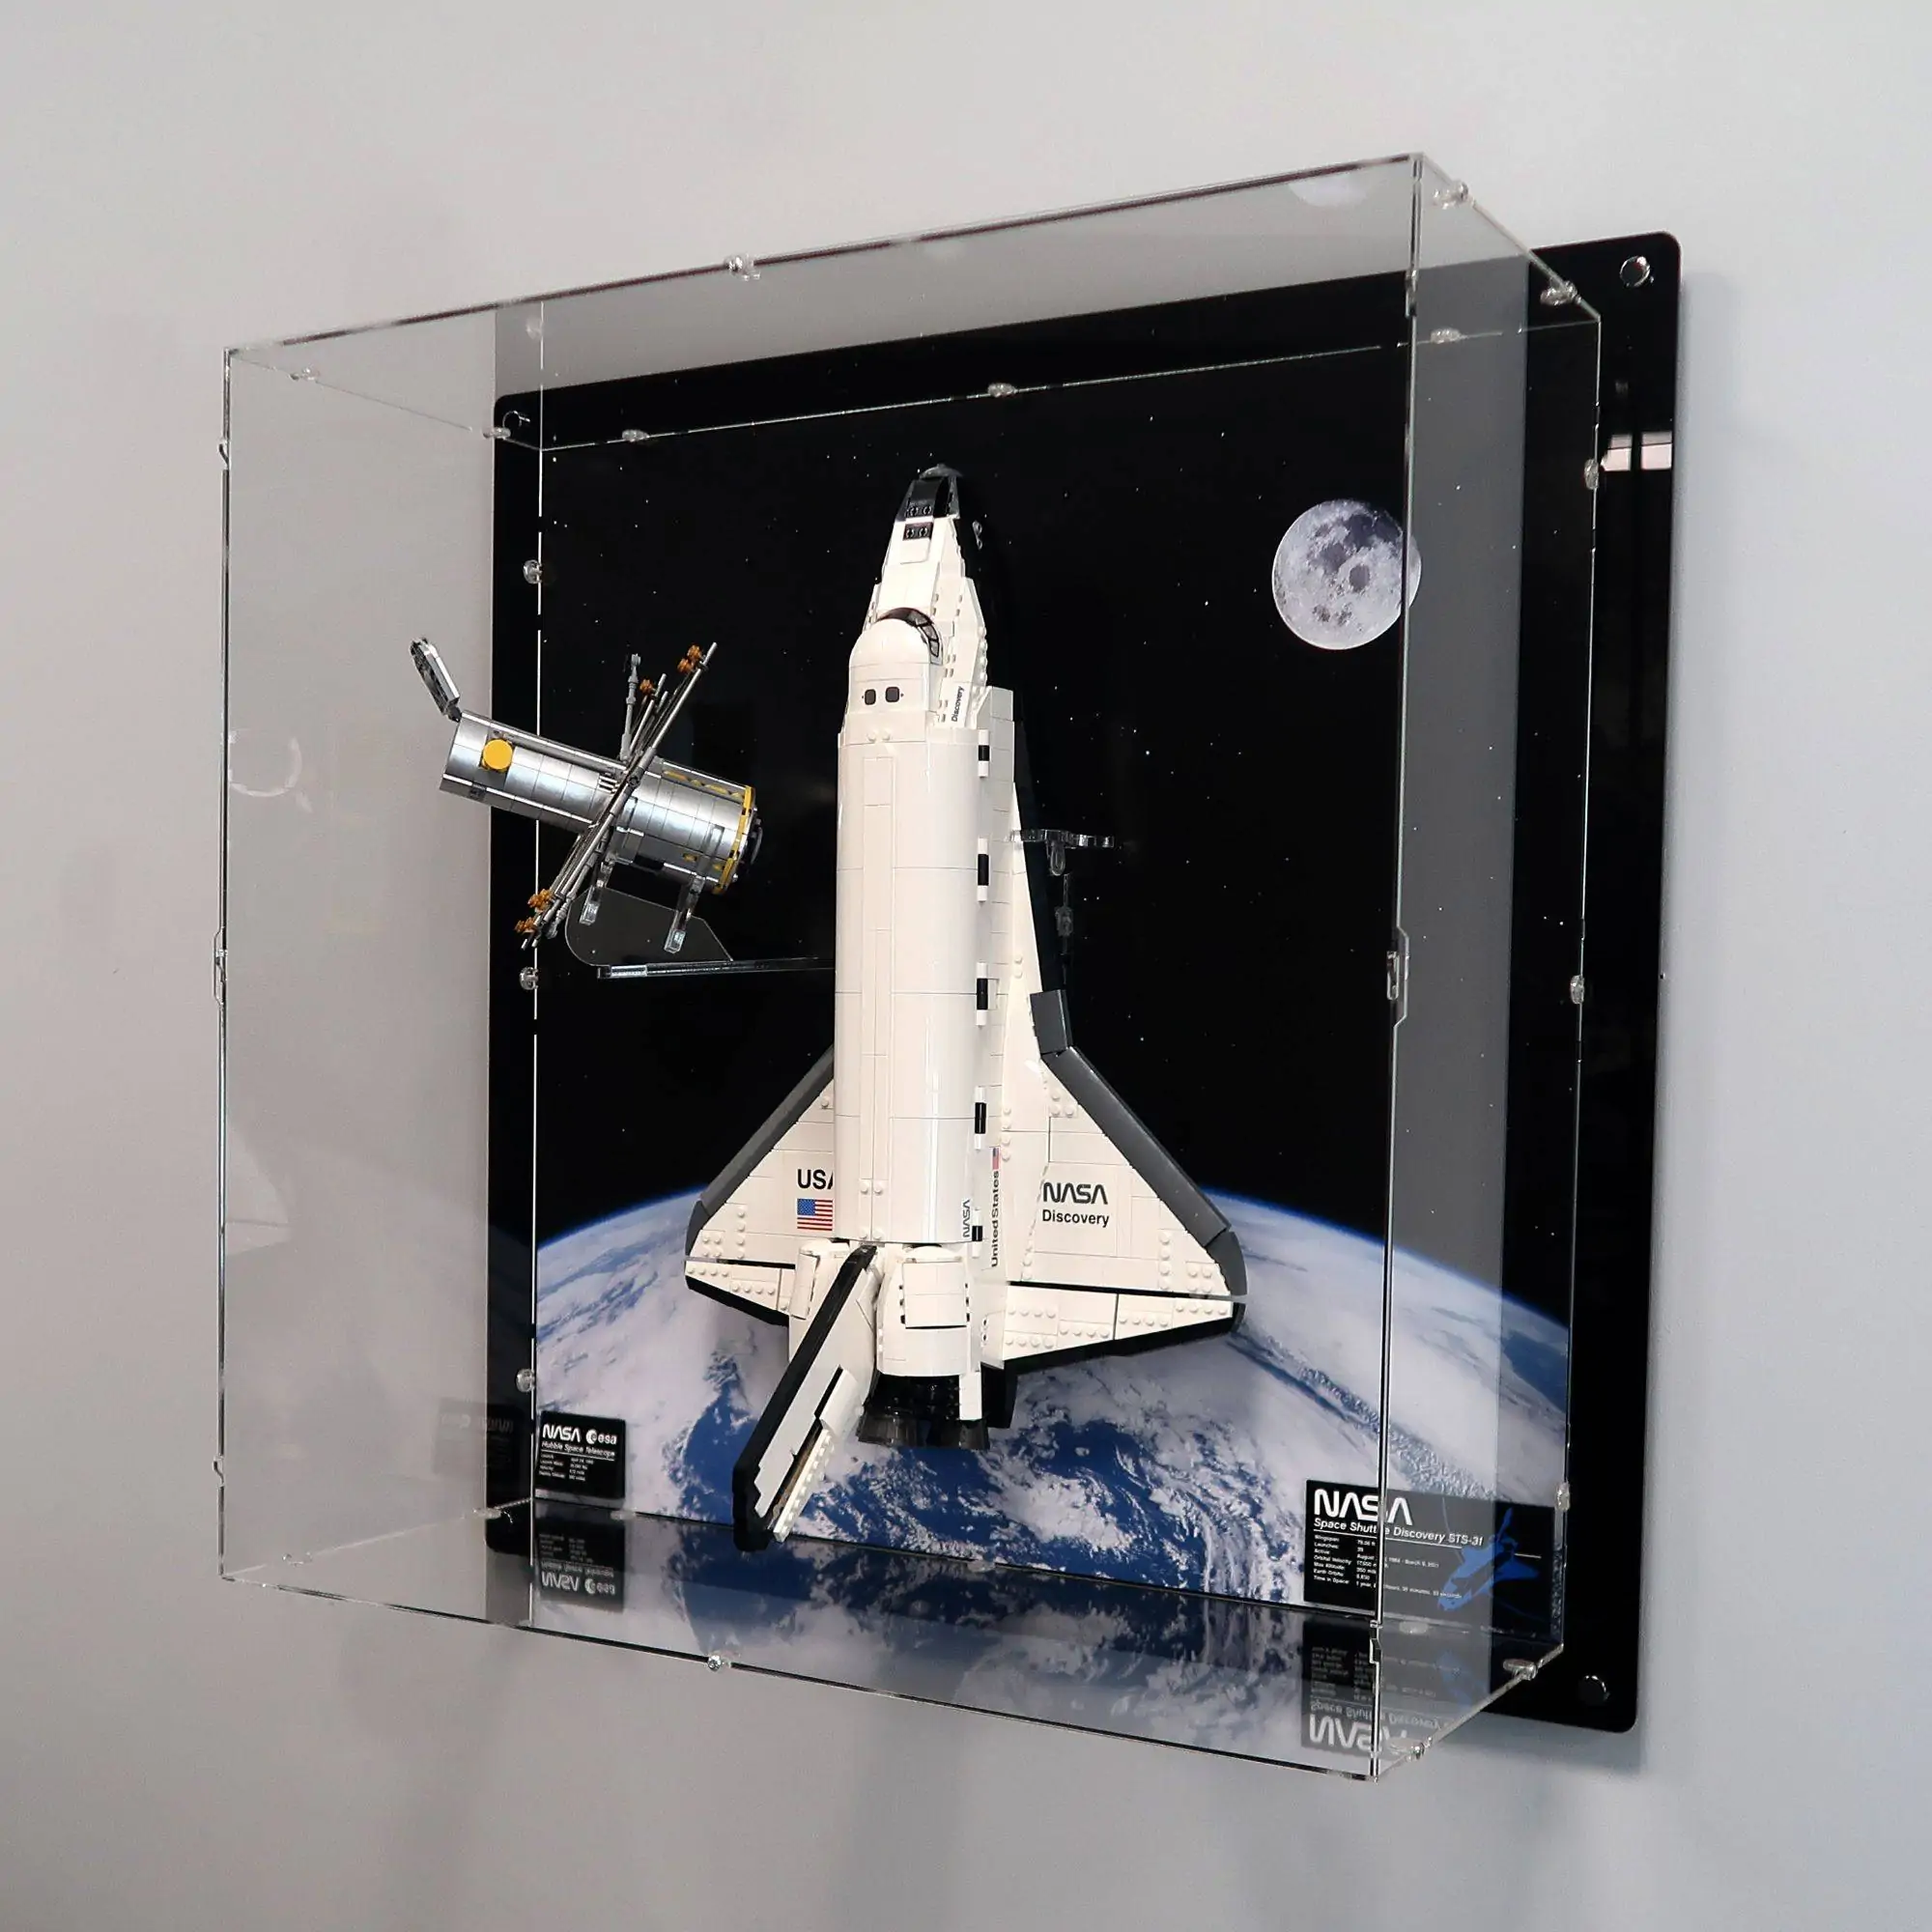 Lego Shuttle 10283 Expert NASA Space Shuttle Discovery & Hubble